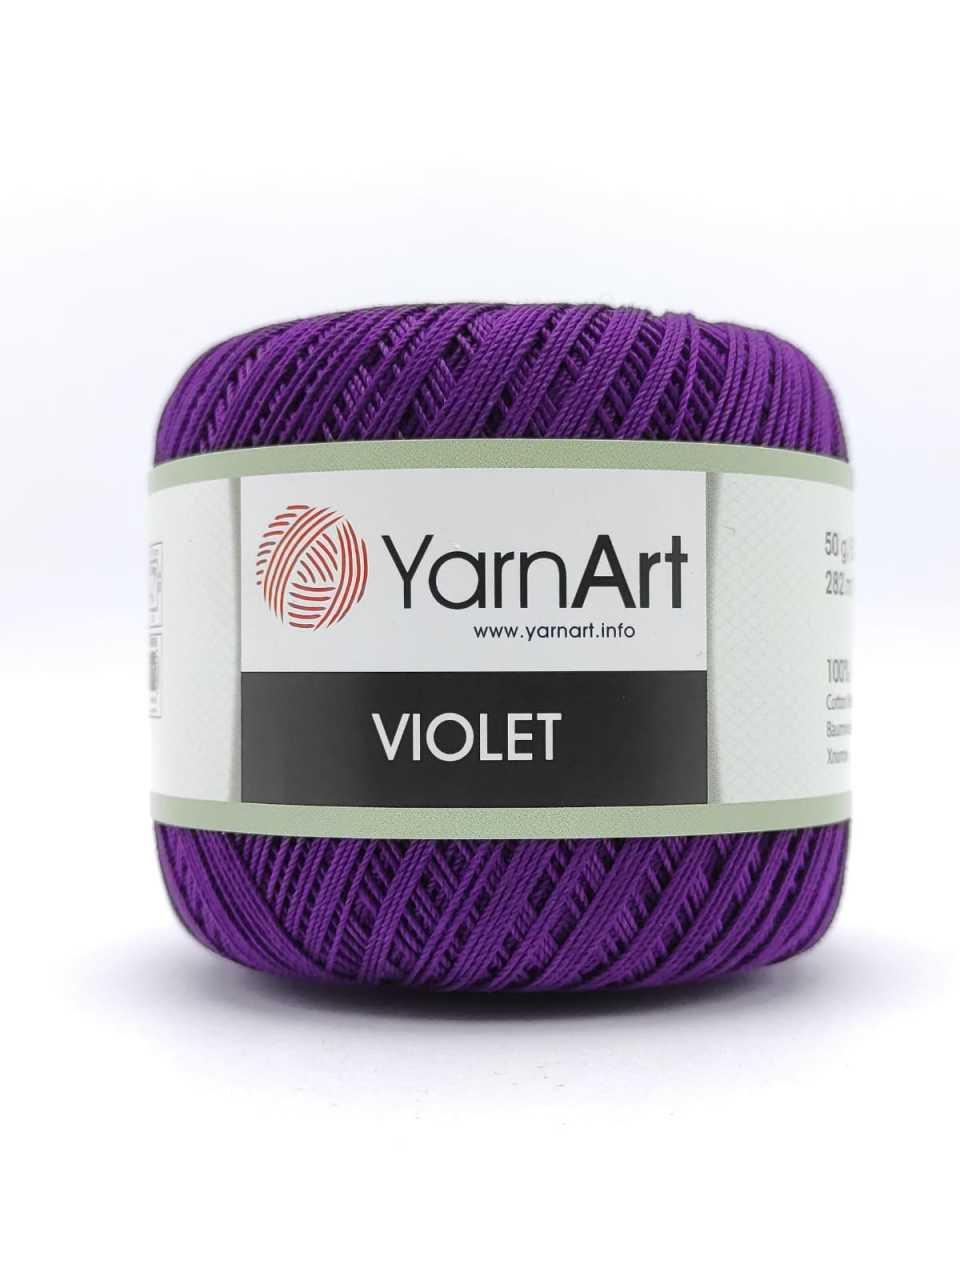 Yarnart Violet 5550